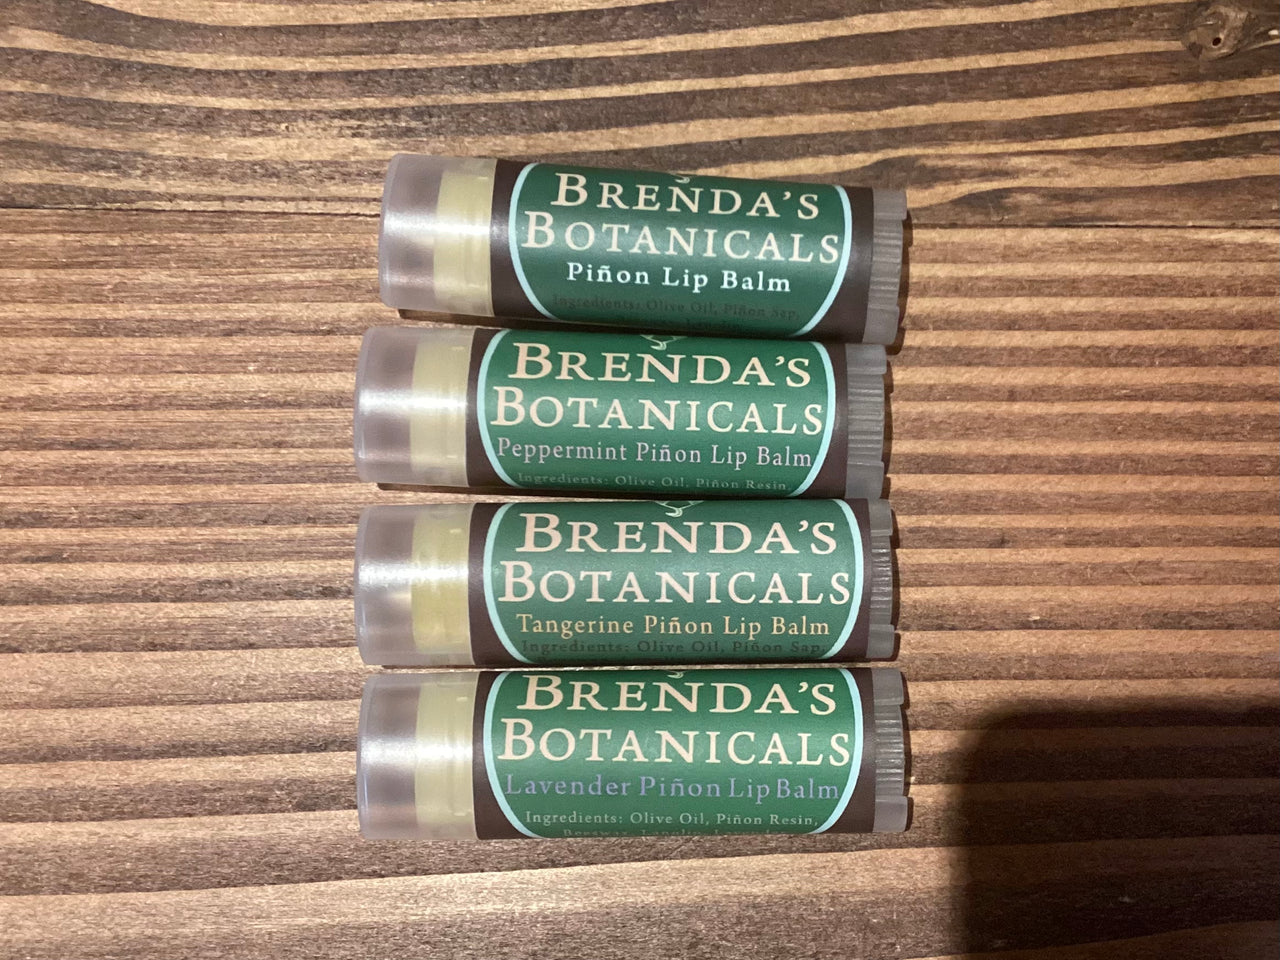 Brenda’s Botanicals - Original Lip Balm